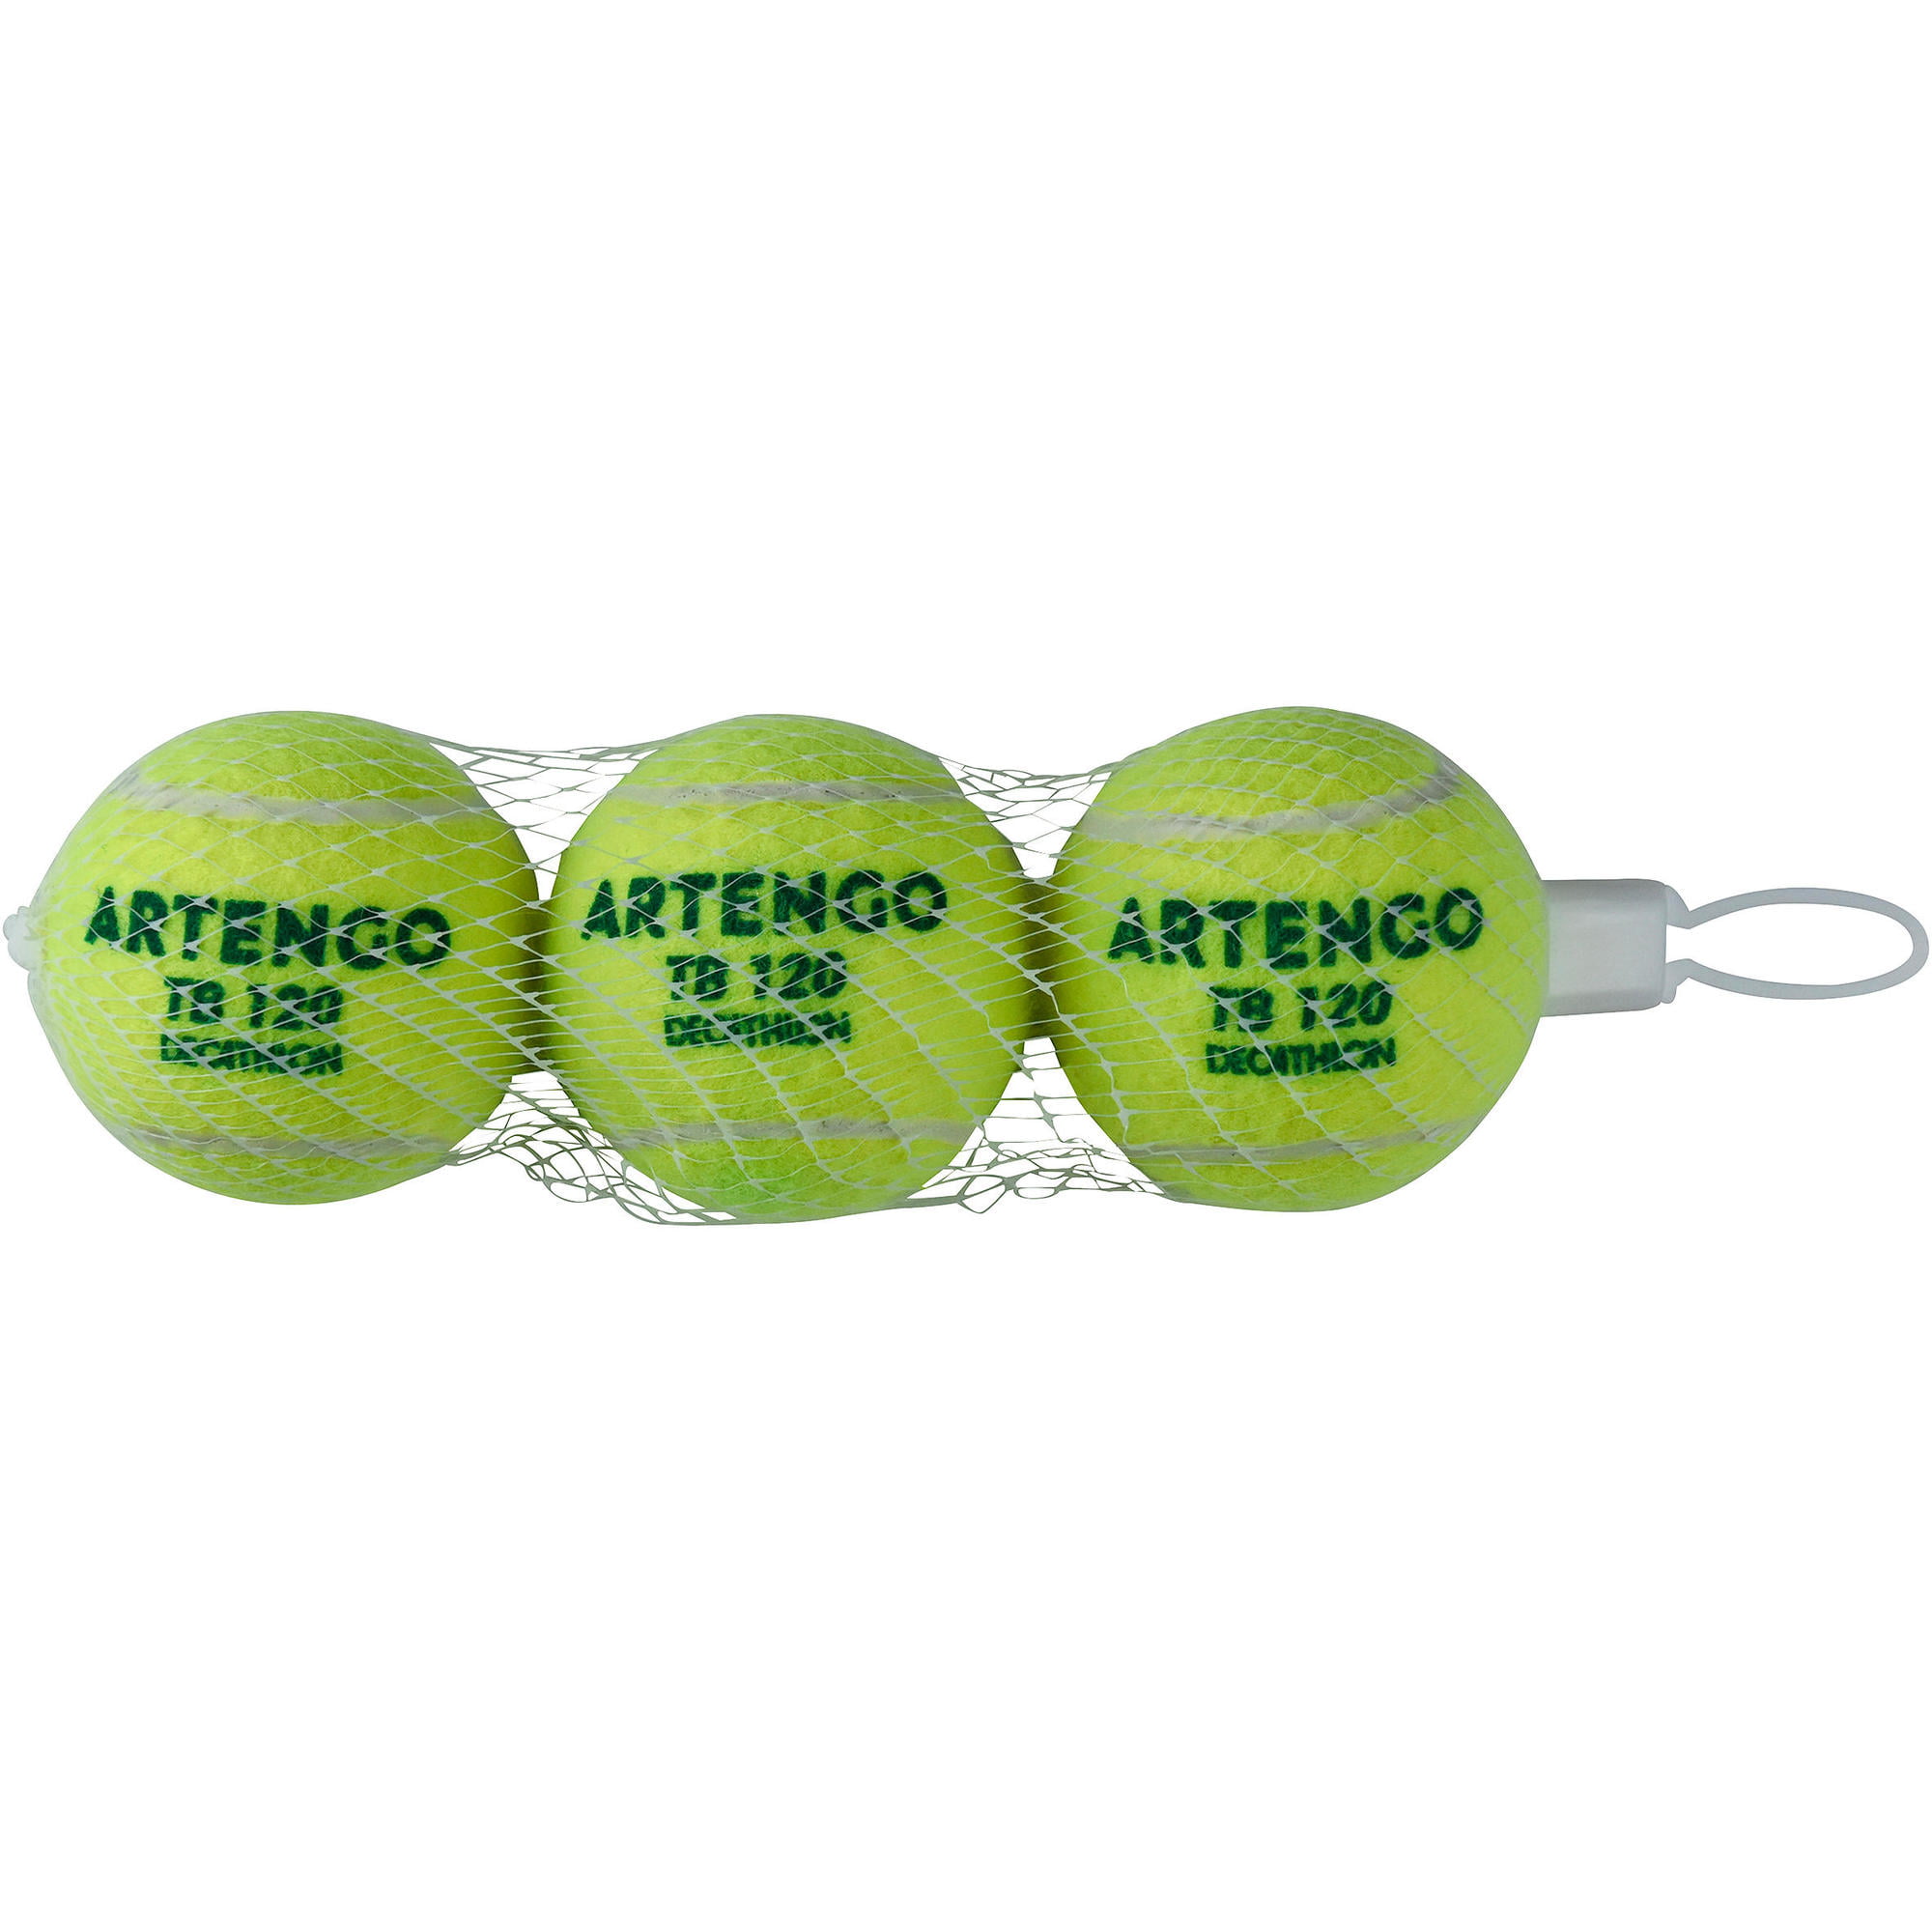 artengo tennis balls